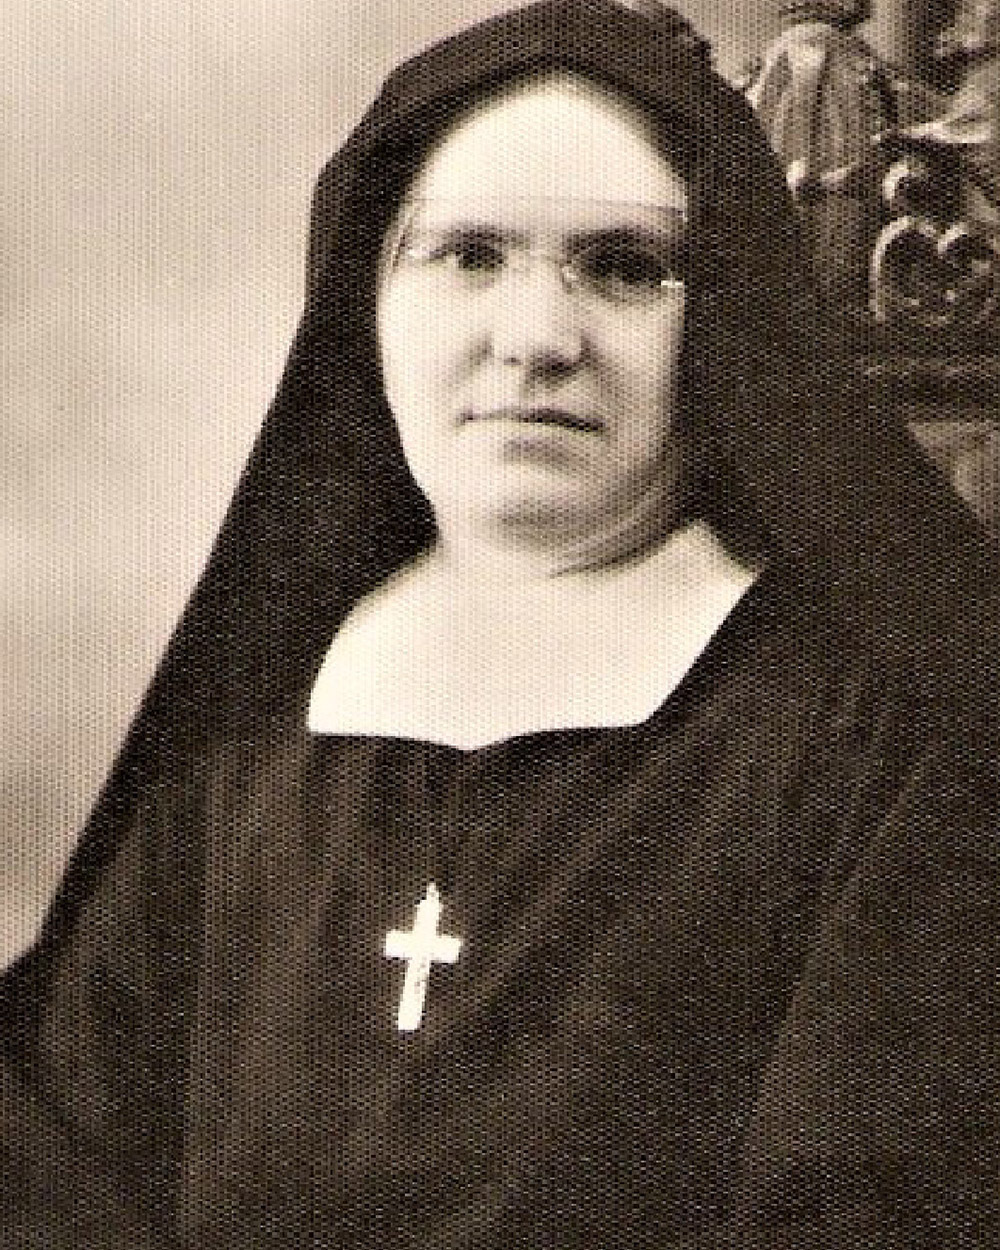 Sister-M.-Barbara-Decowski-OSF-1903-1941